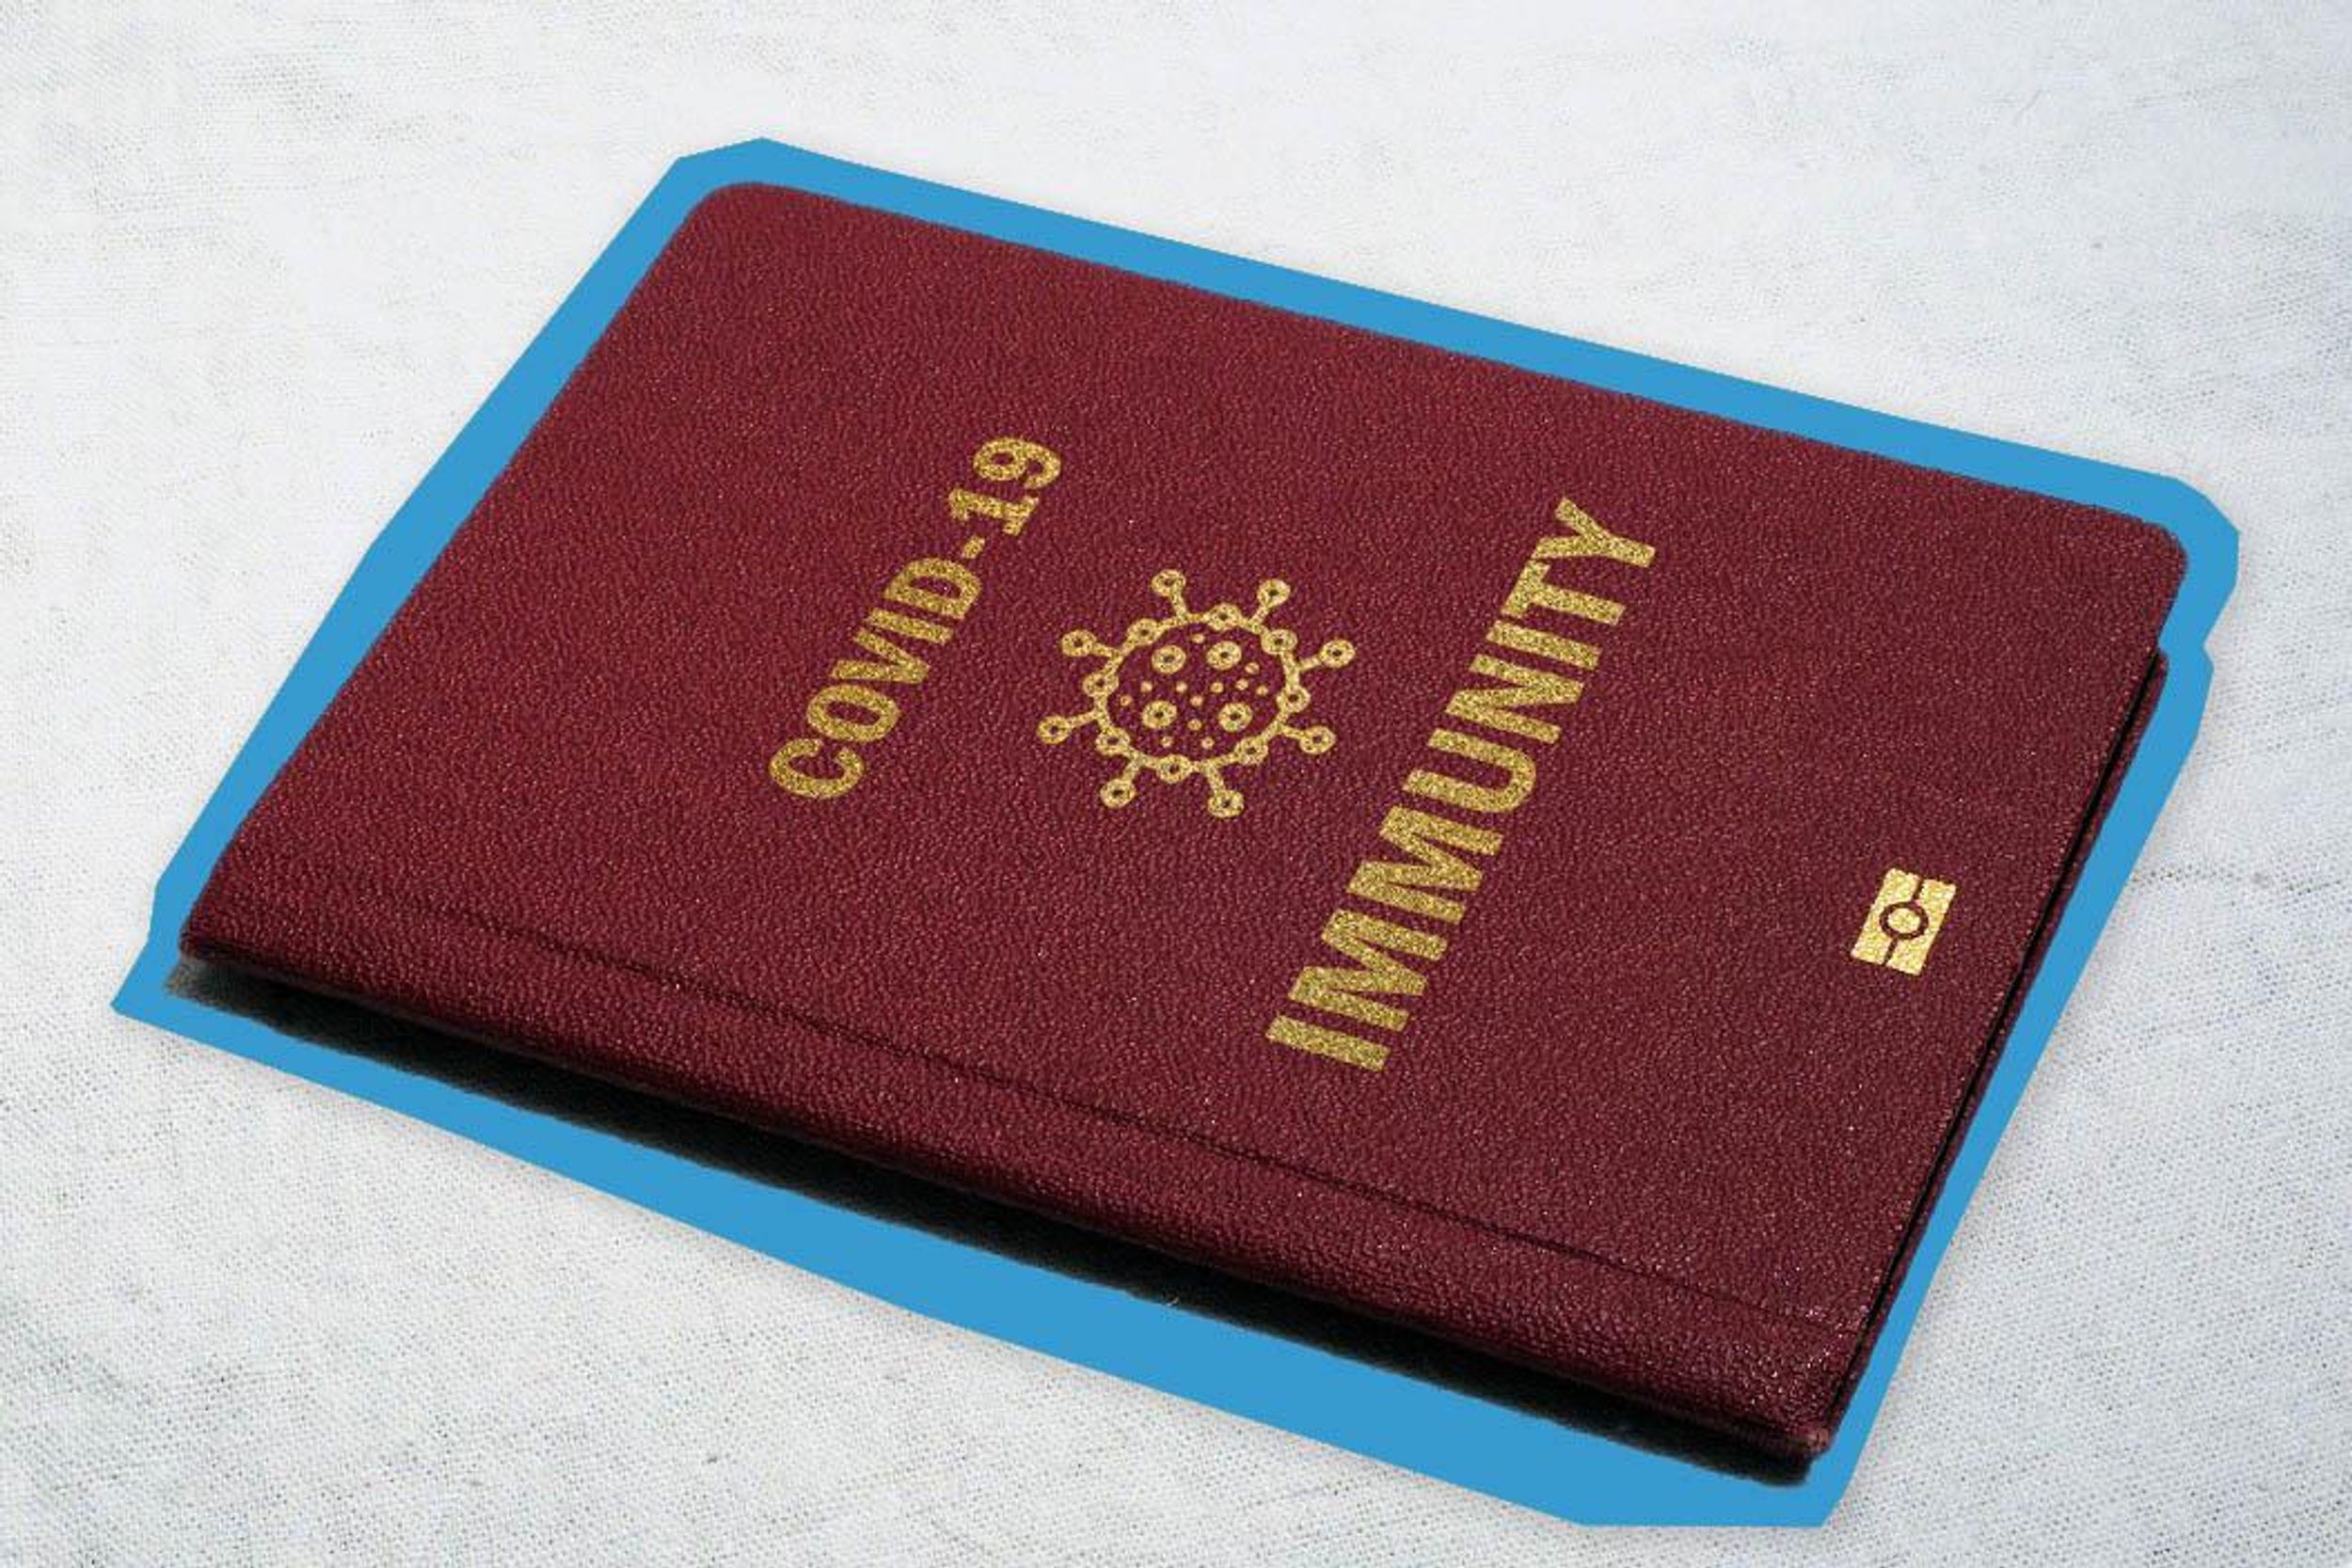 COVID immunity passport. Art by Gabriella Turrisi